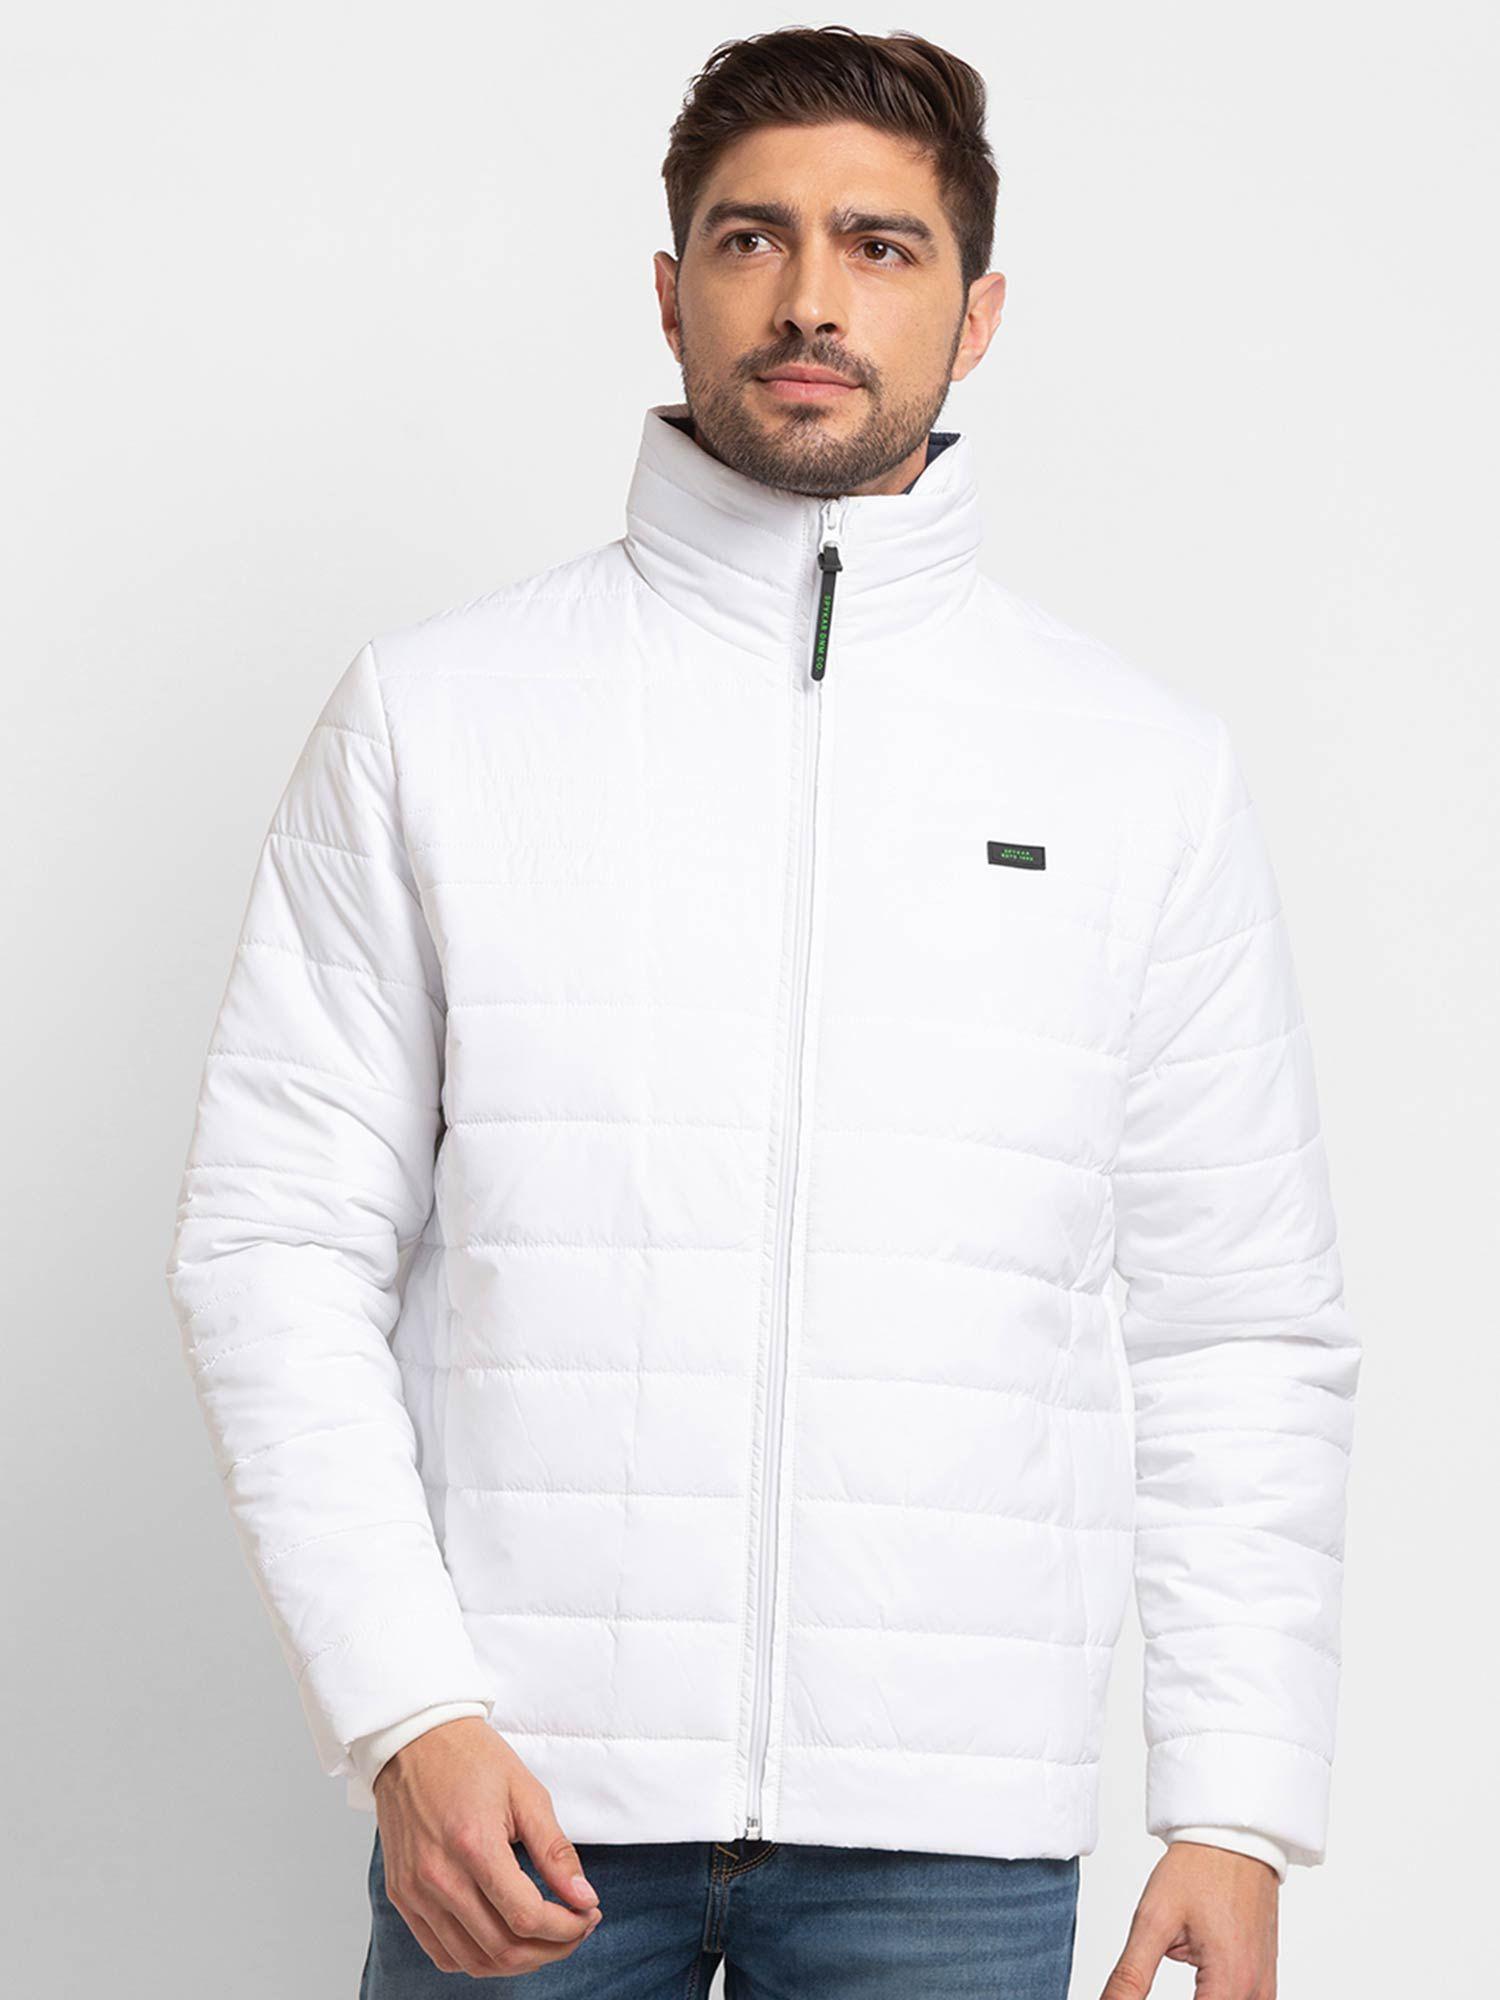 white polyester full sleeve casual jacket for men